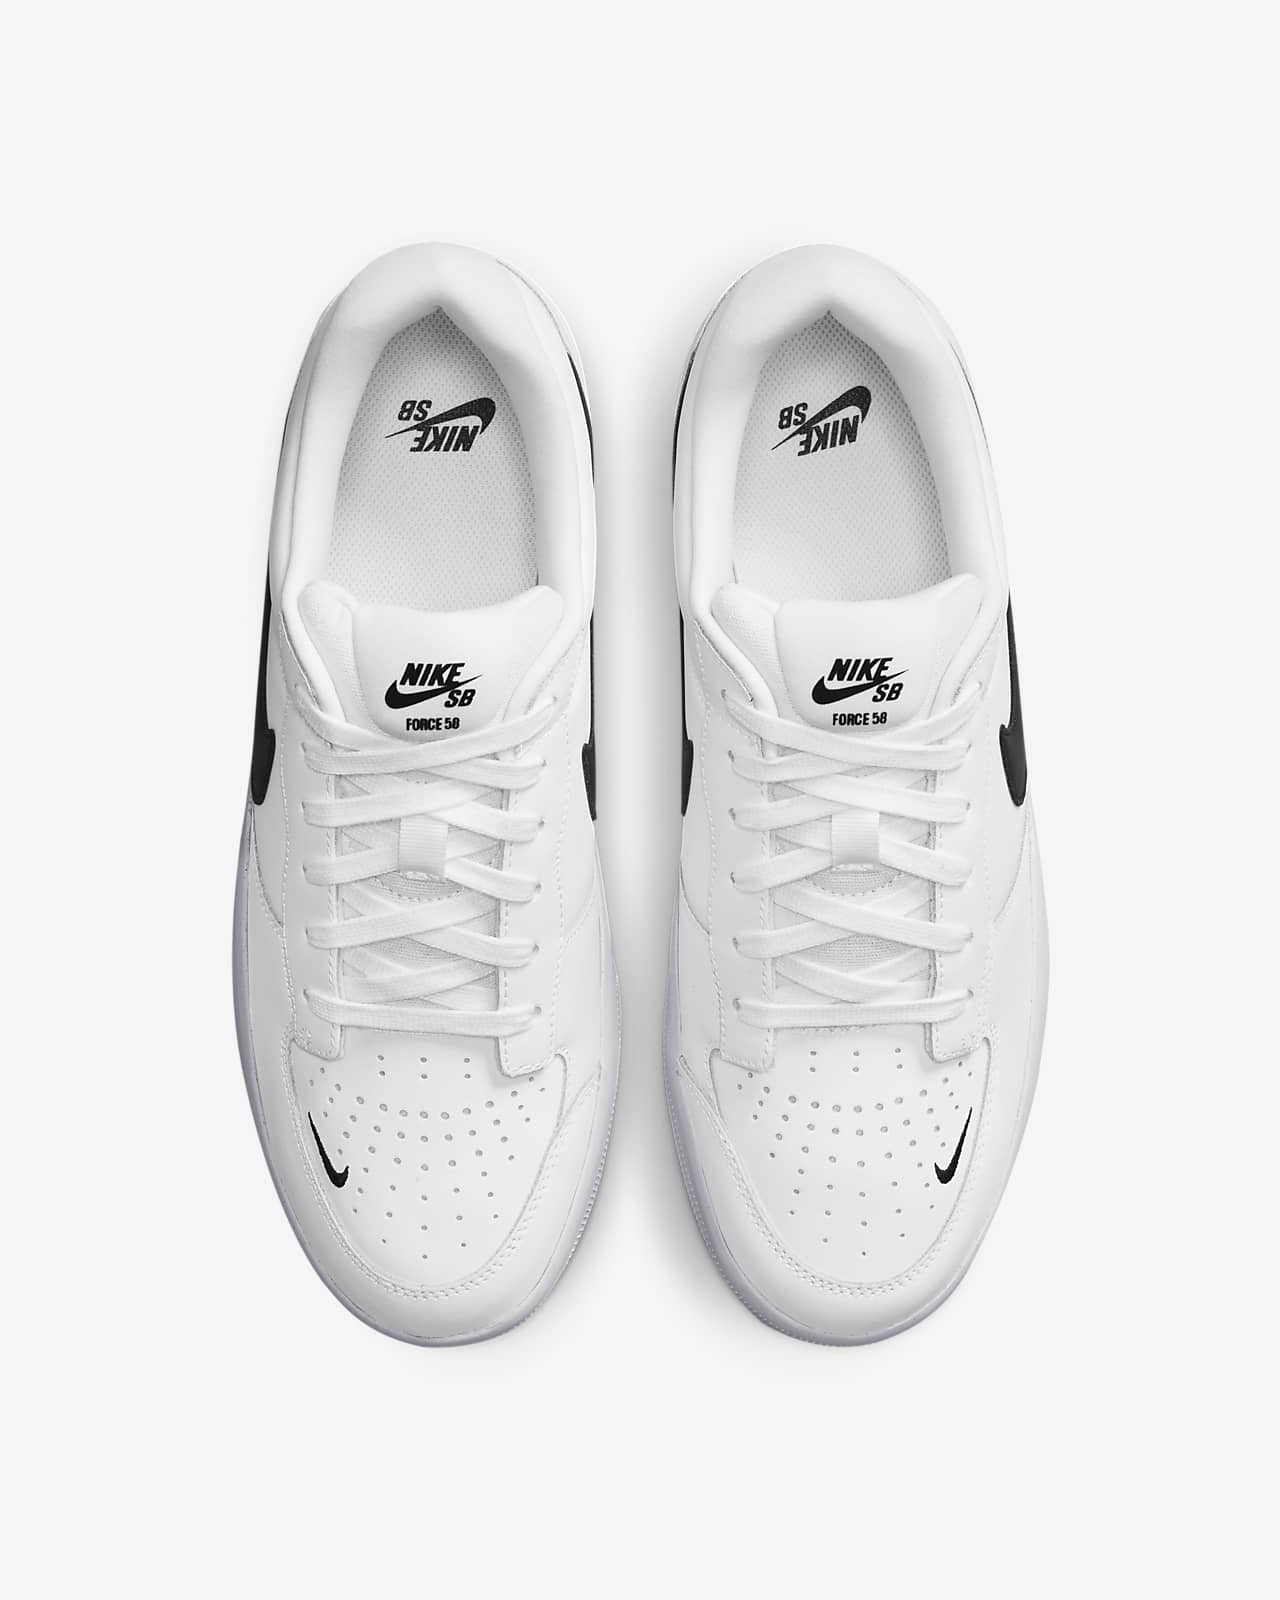 Tênis Nike SB Force 58 Preto/ Branco - Kapiva Calçados